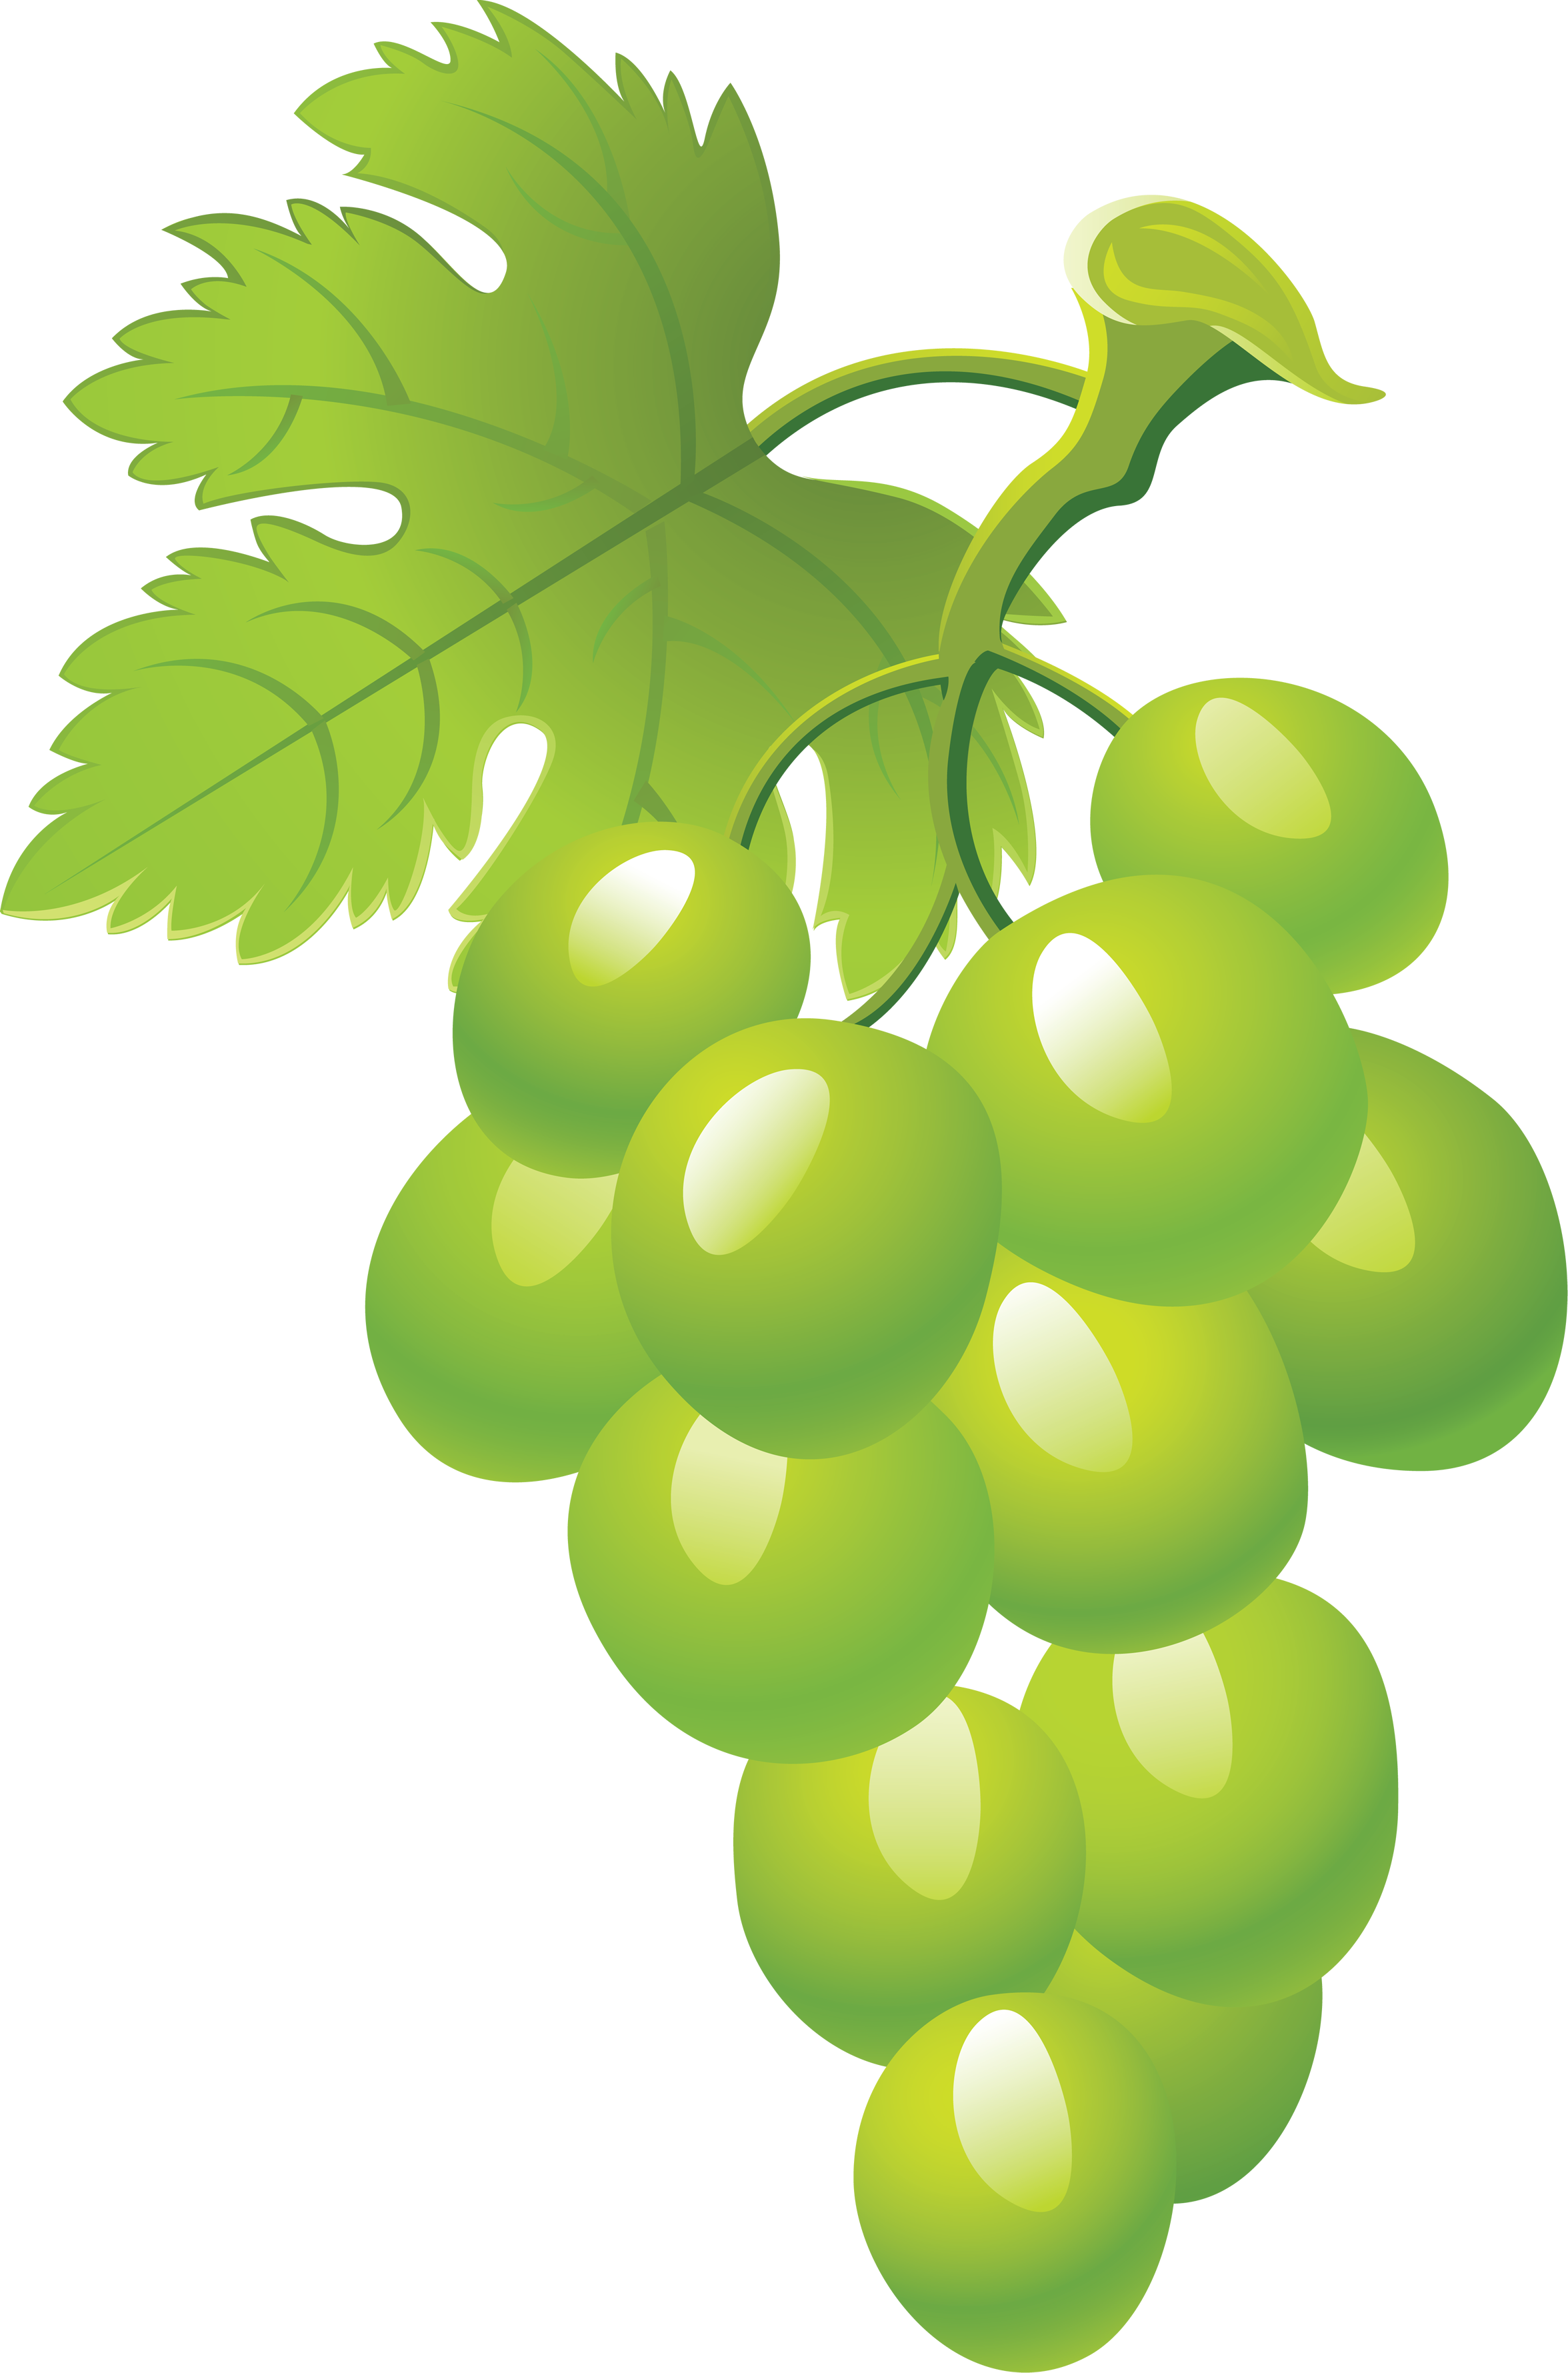 Immagini di uva verde